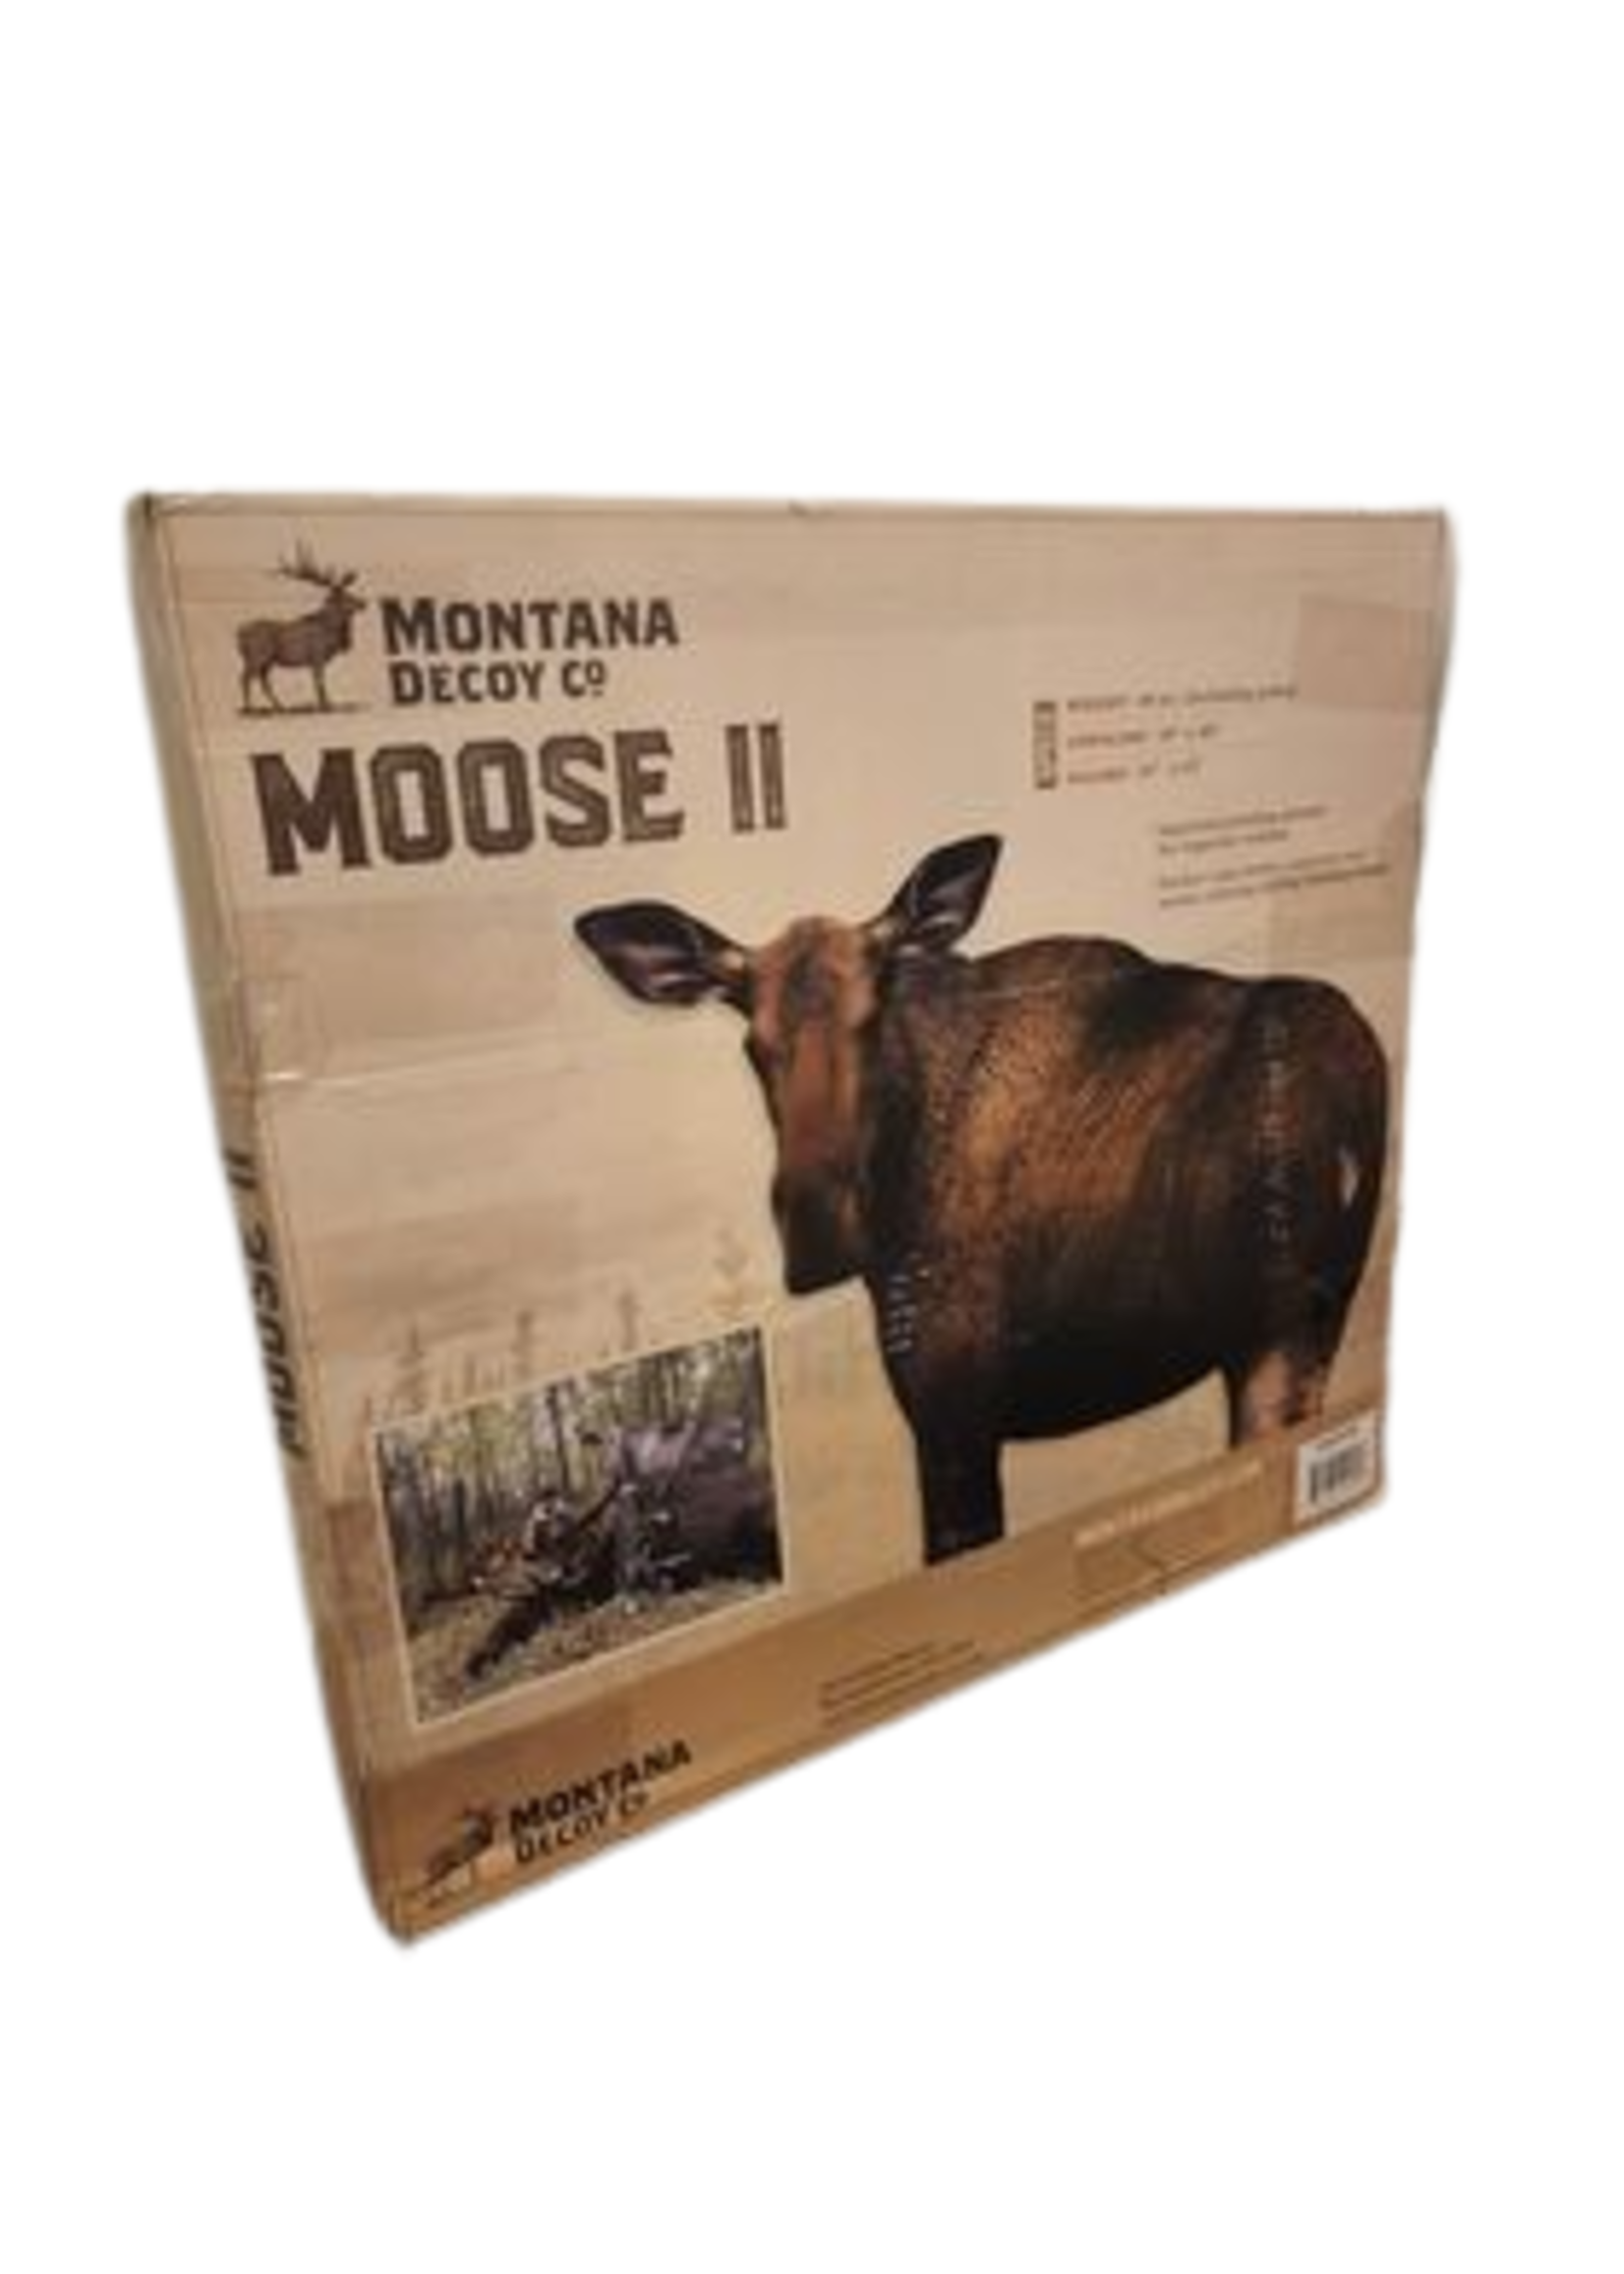 Montana Decoy Co. Moose II Decoy